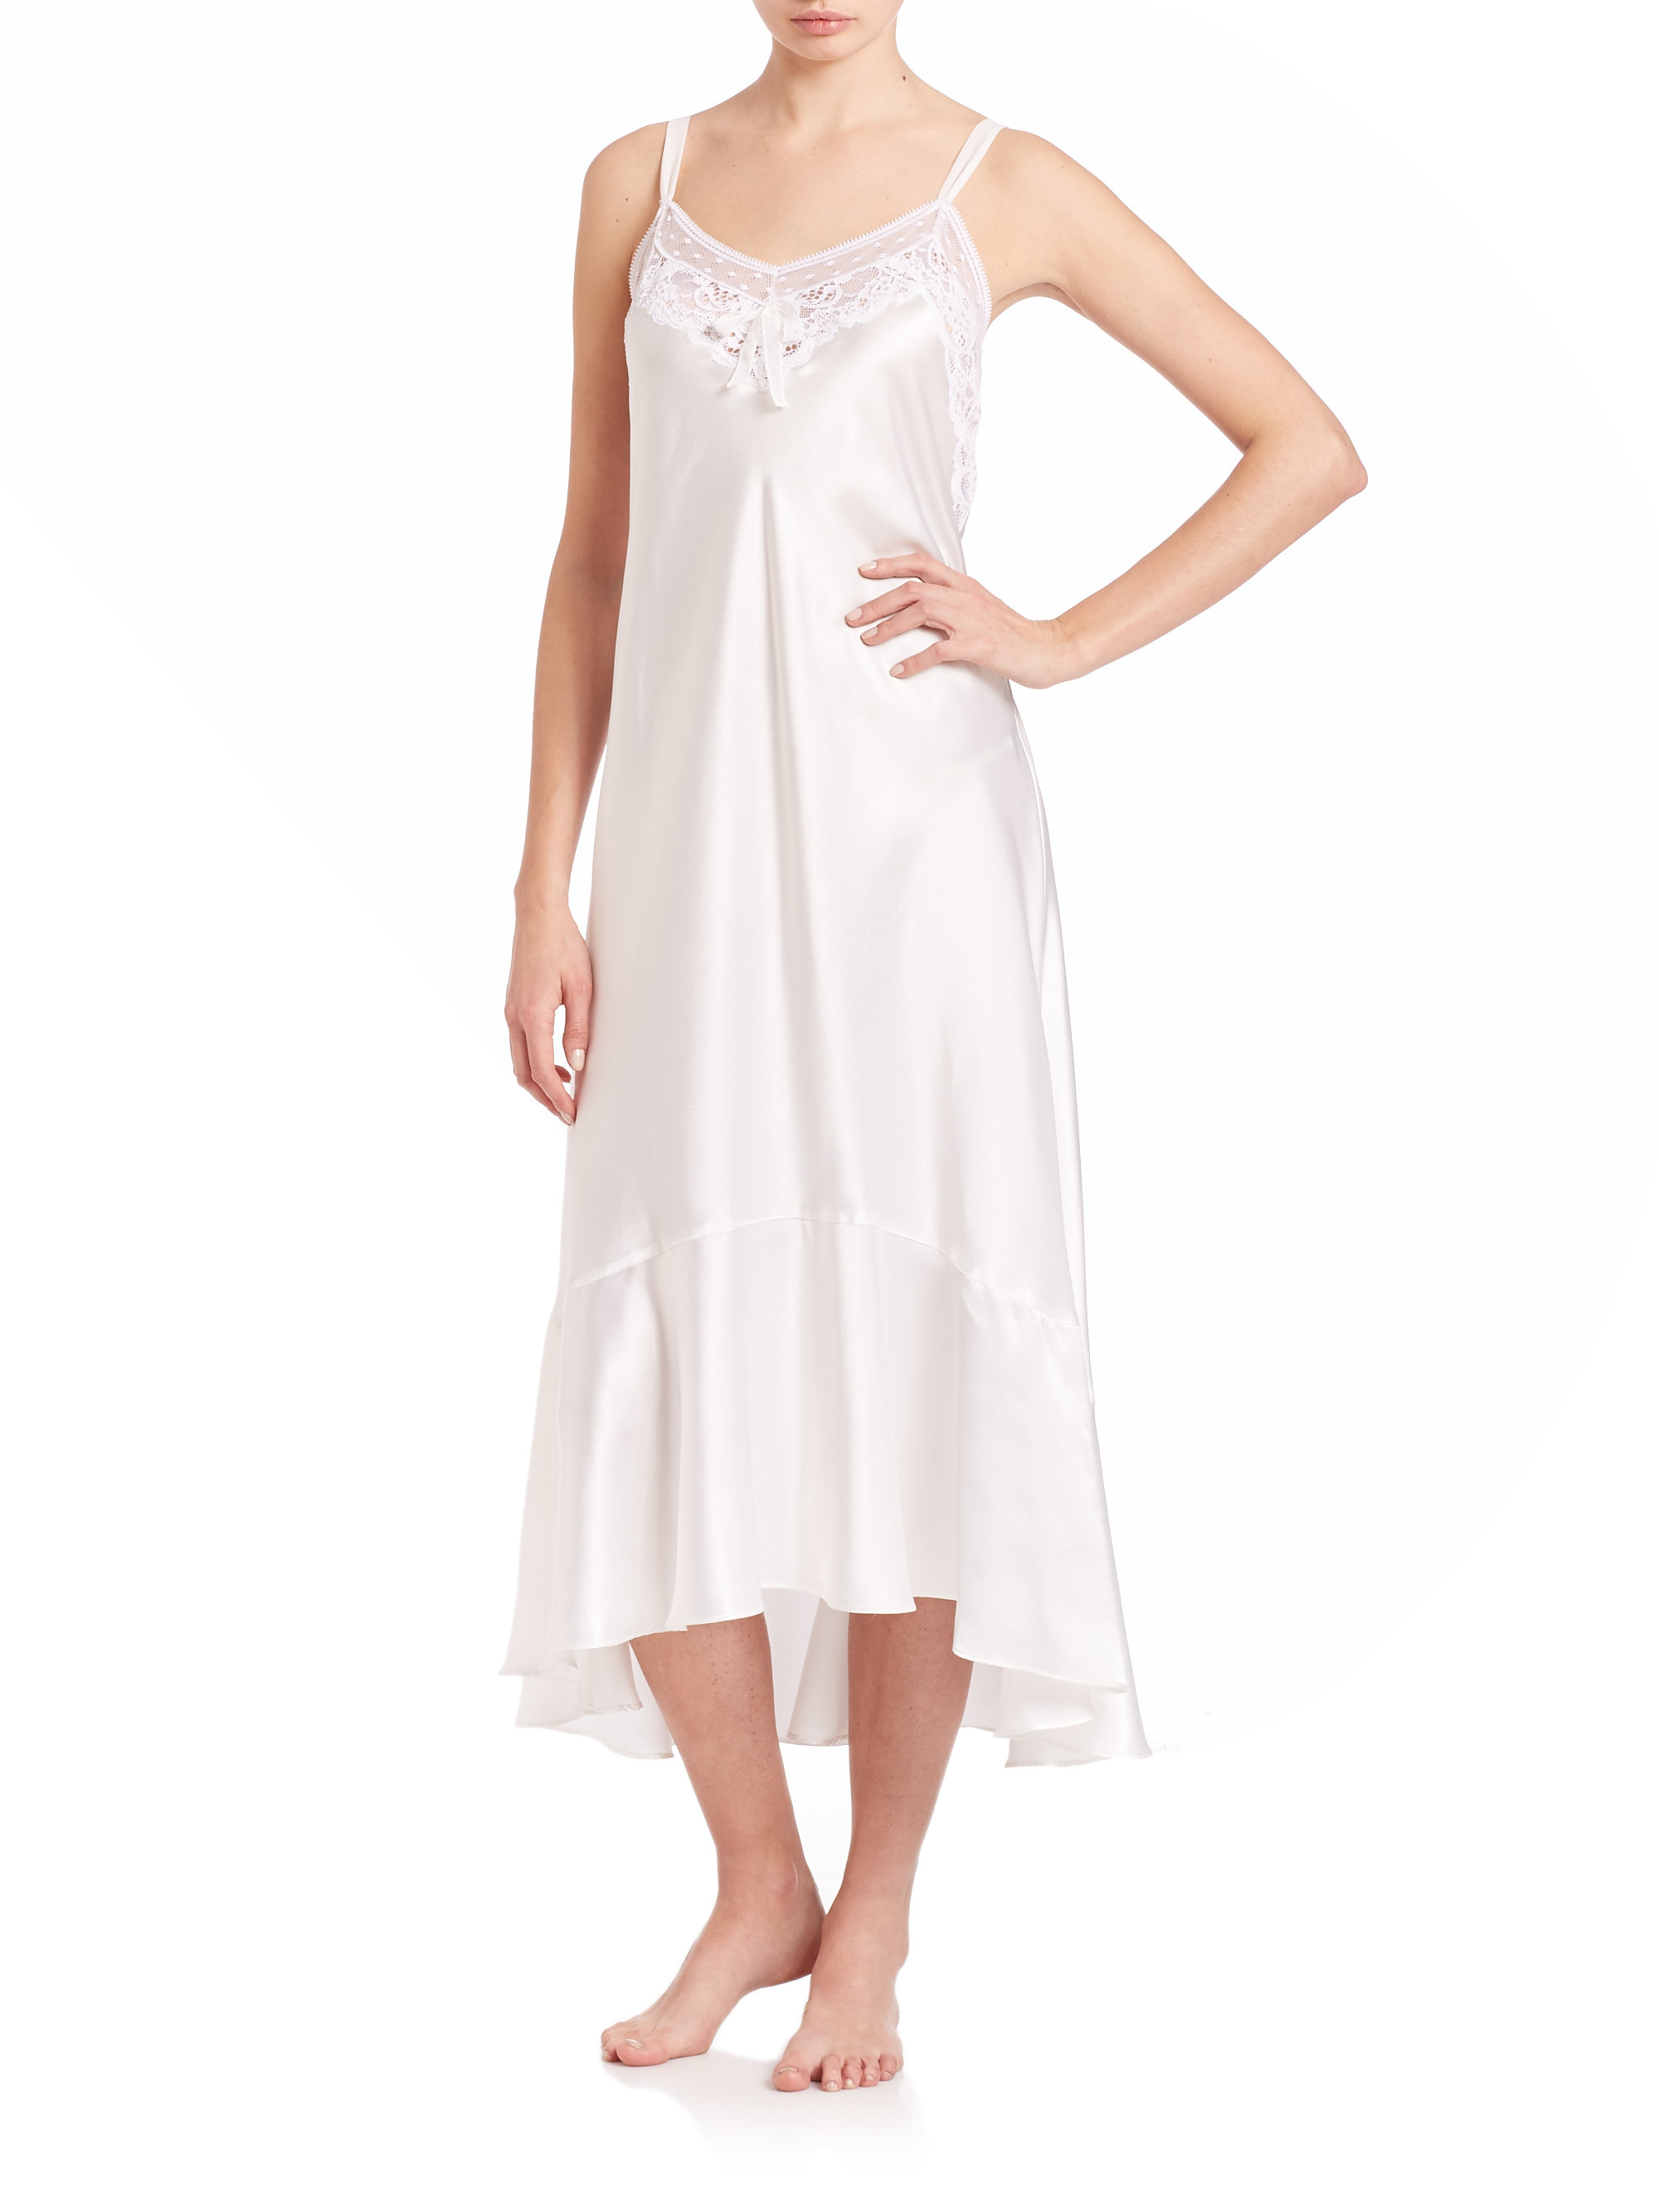 Lyst - Oscar De La Renta Satin Nightgown in White